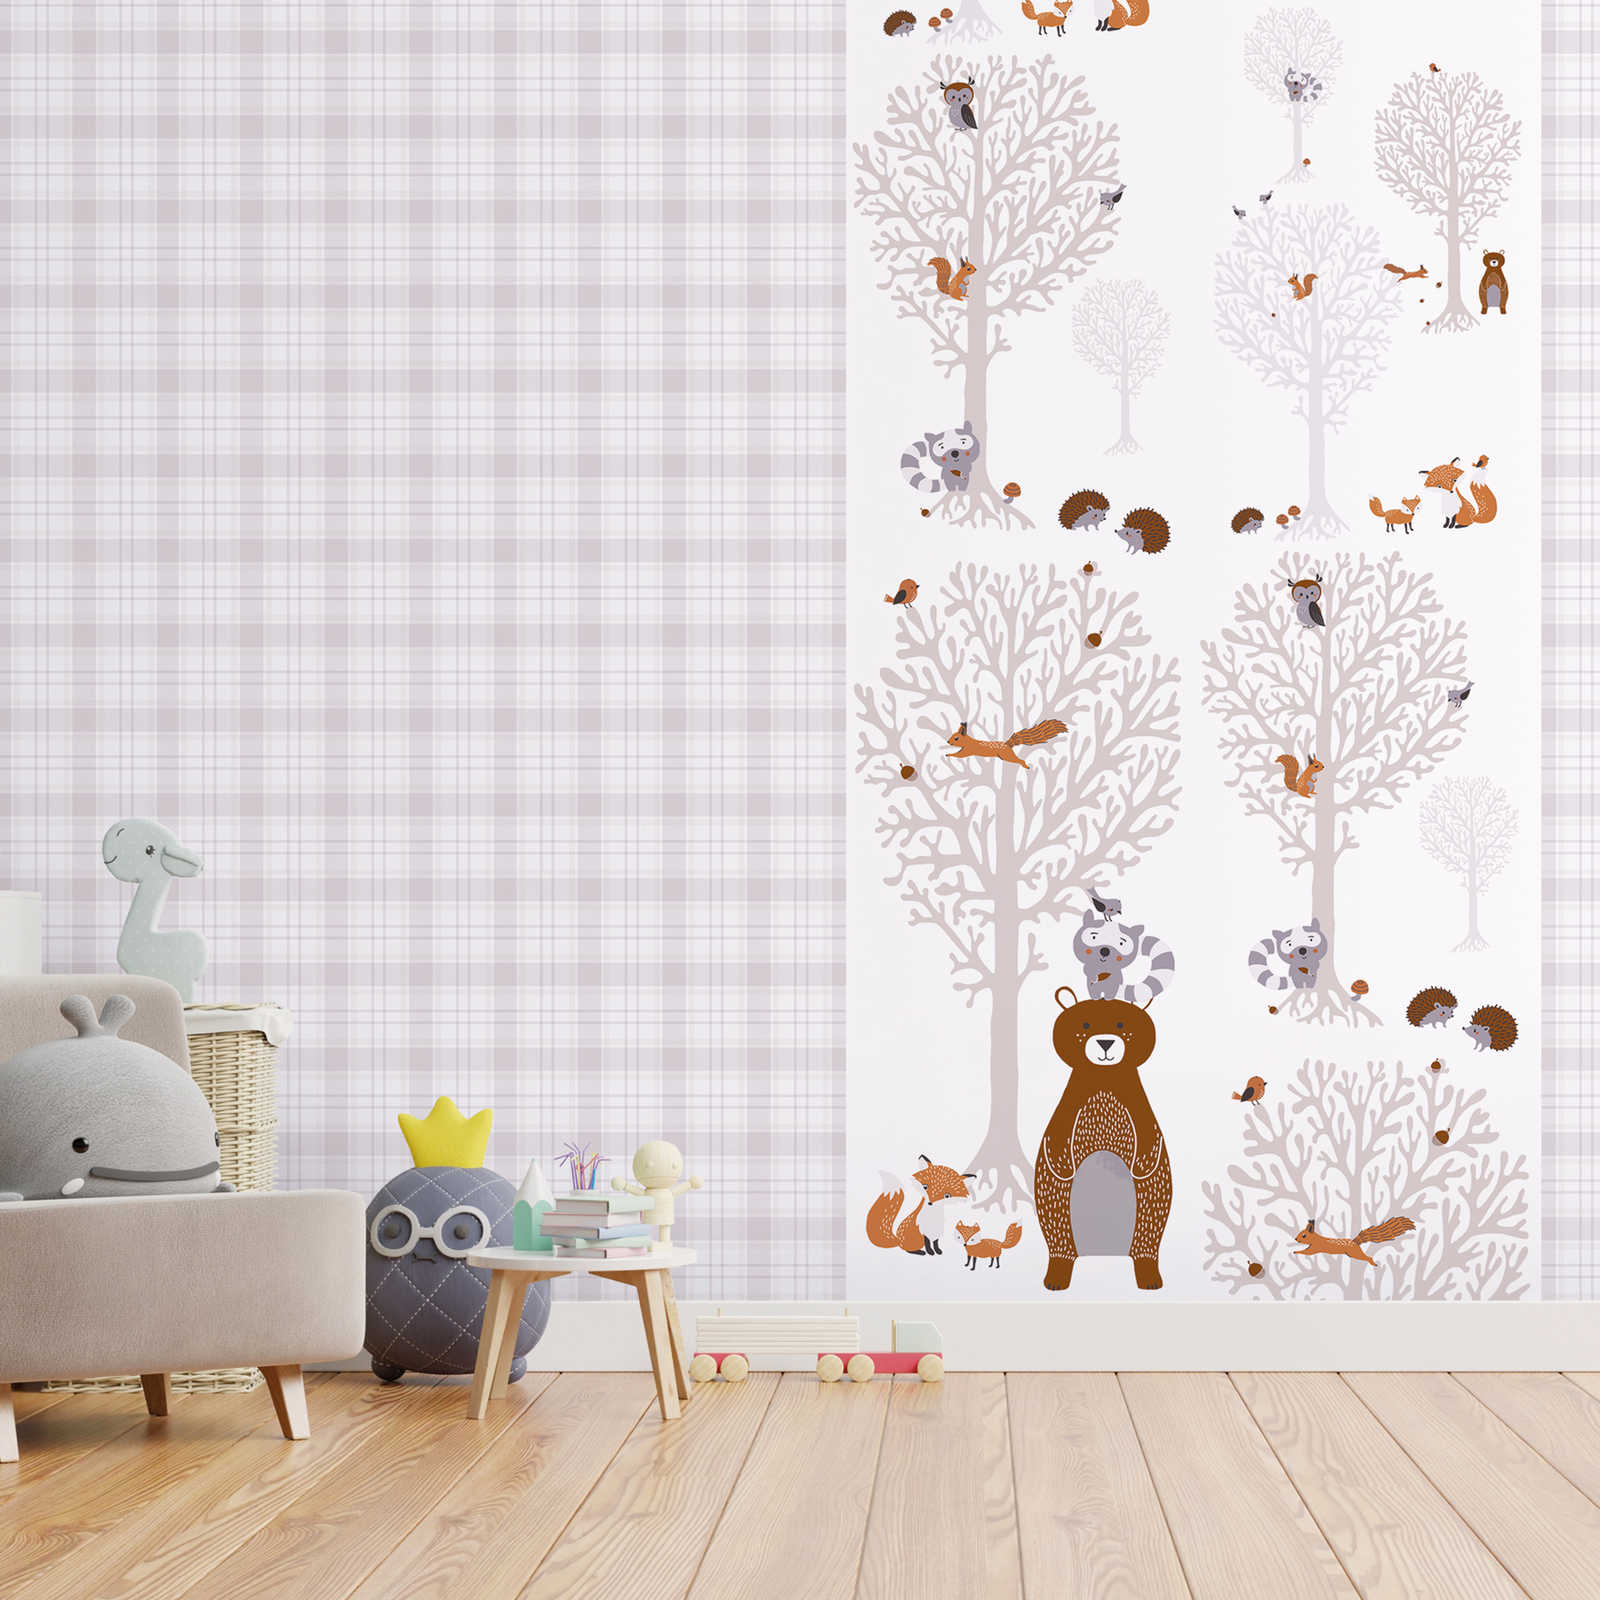         Girls room wallpaper forest animals - brown, grey, white
    